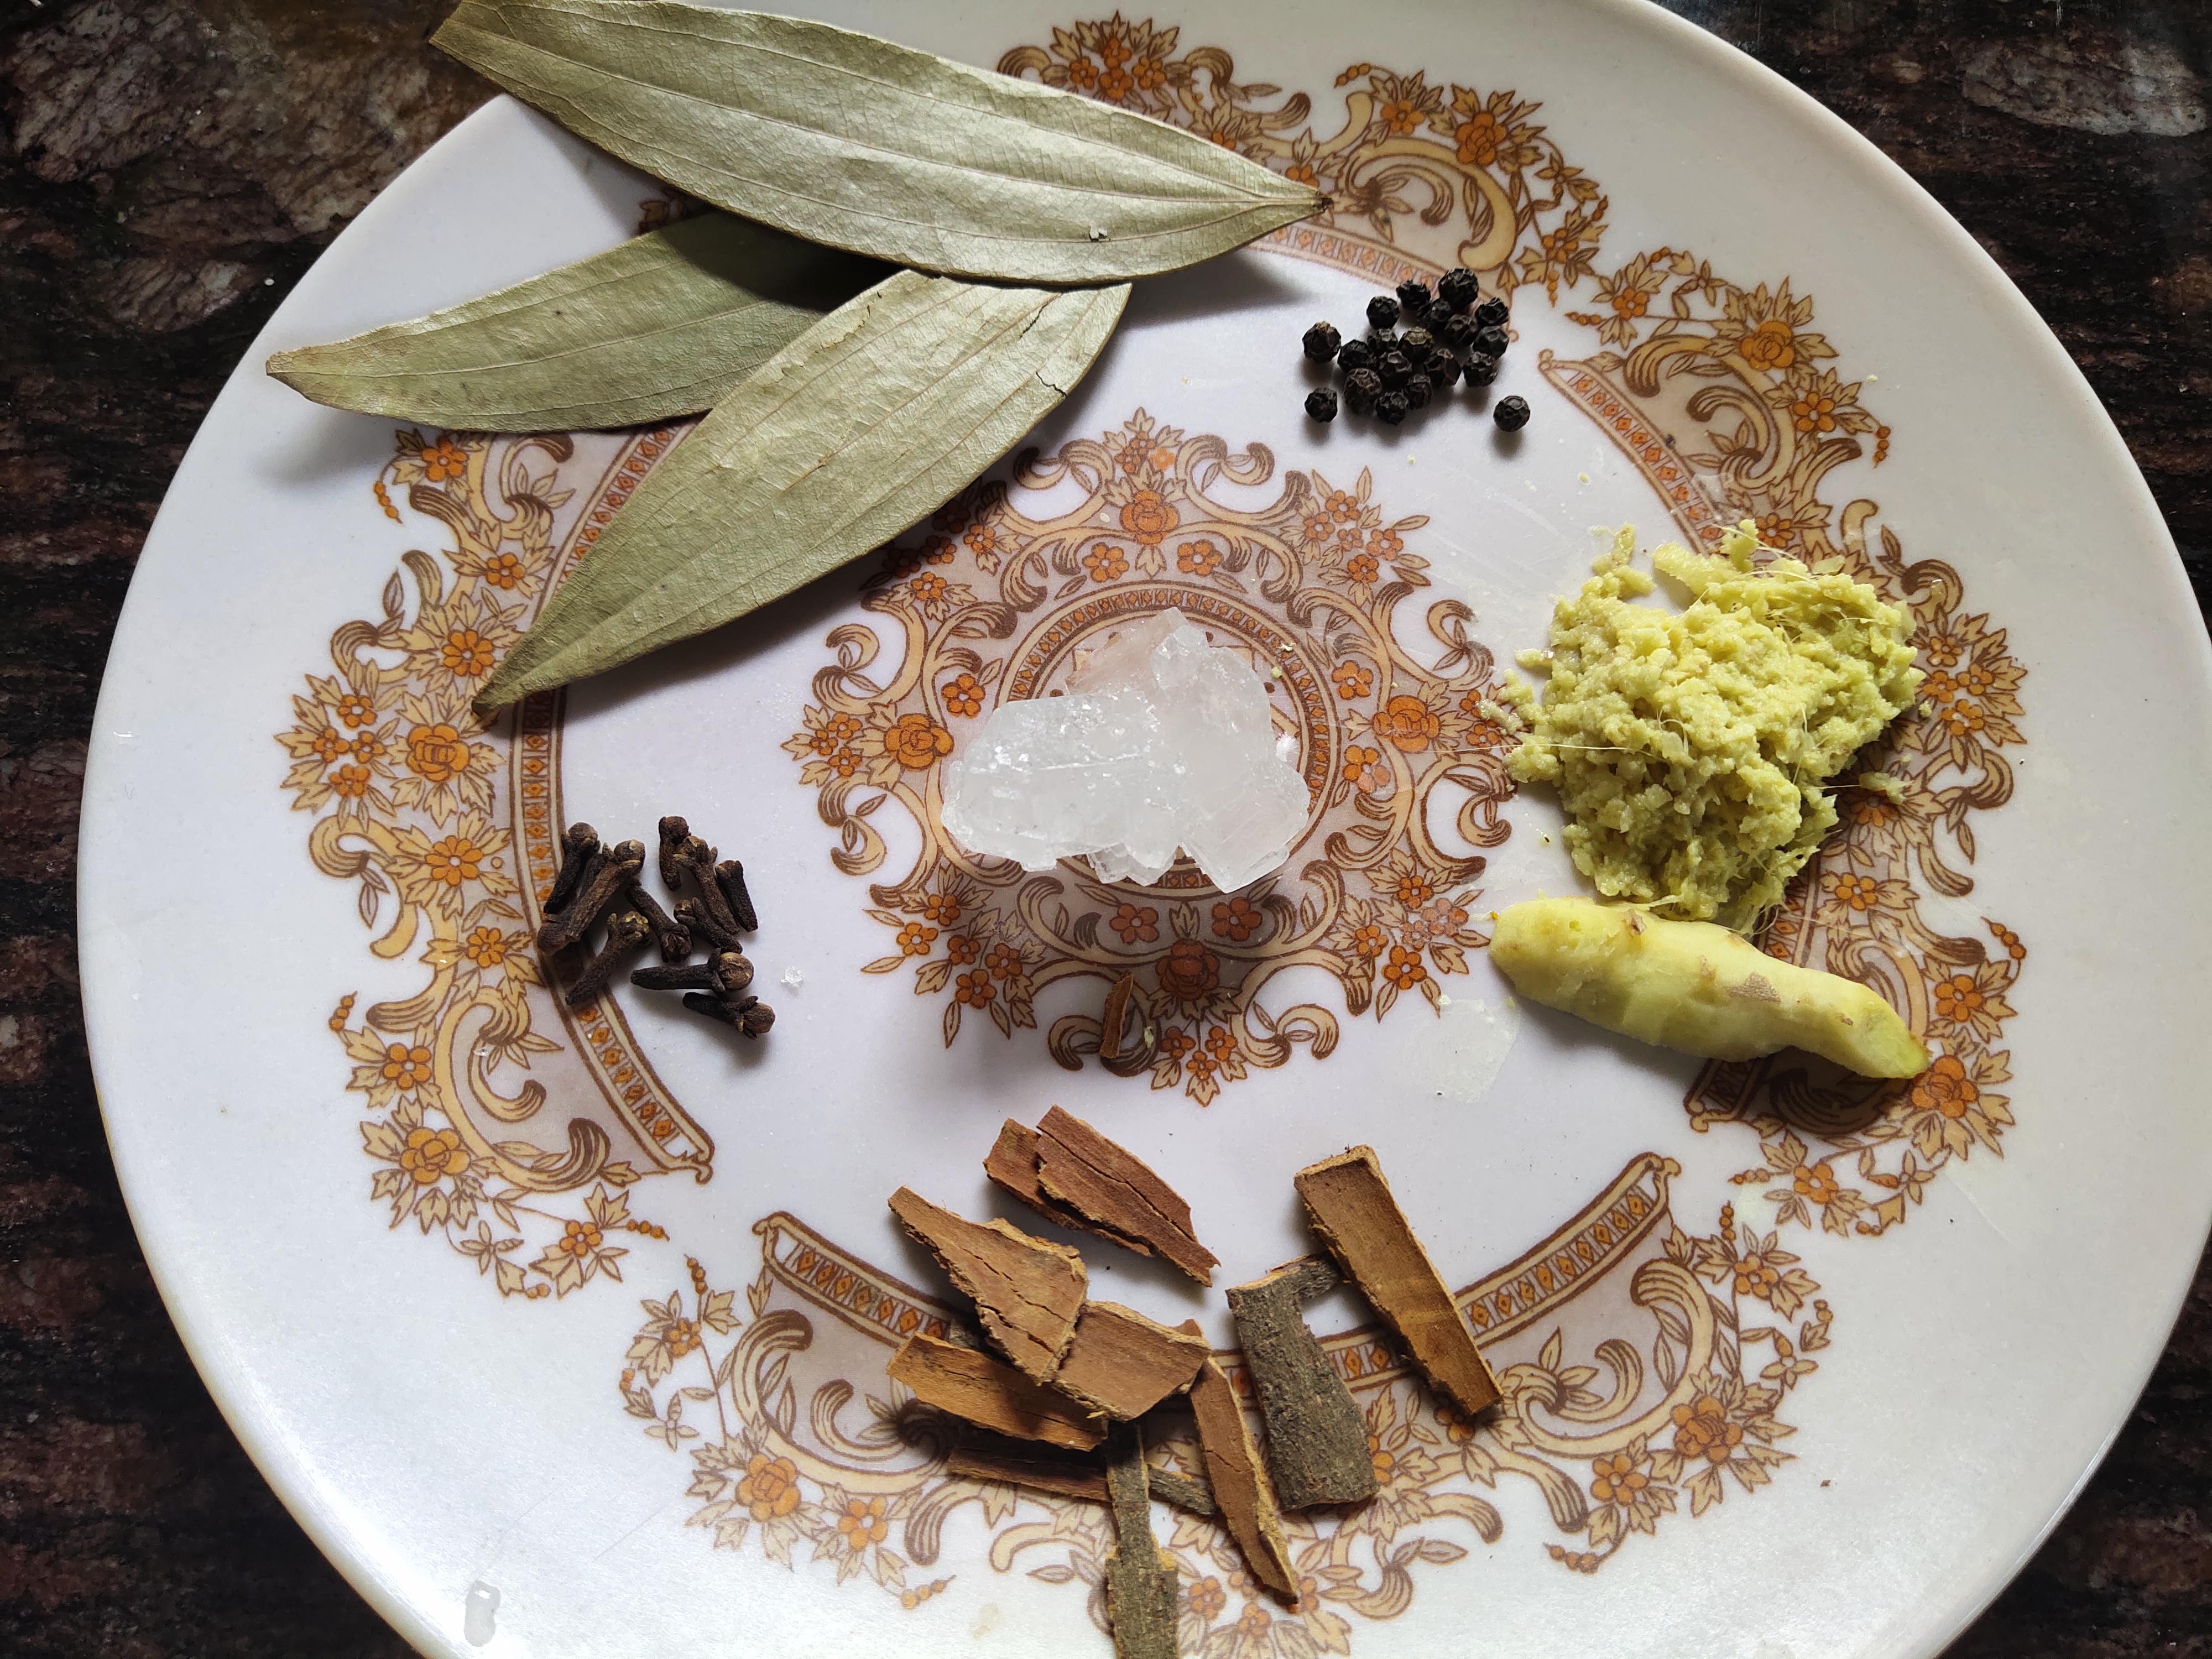 Health Benefits of Kadha or Herbal Tea | Benefits |  Karuwaki Speaks